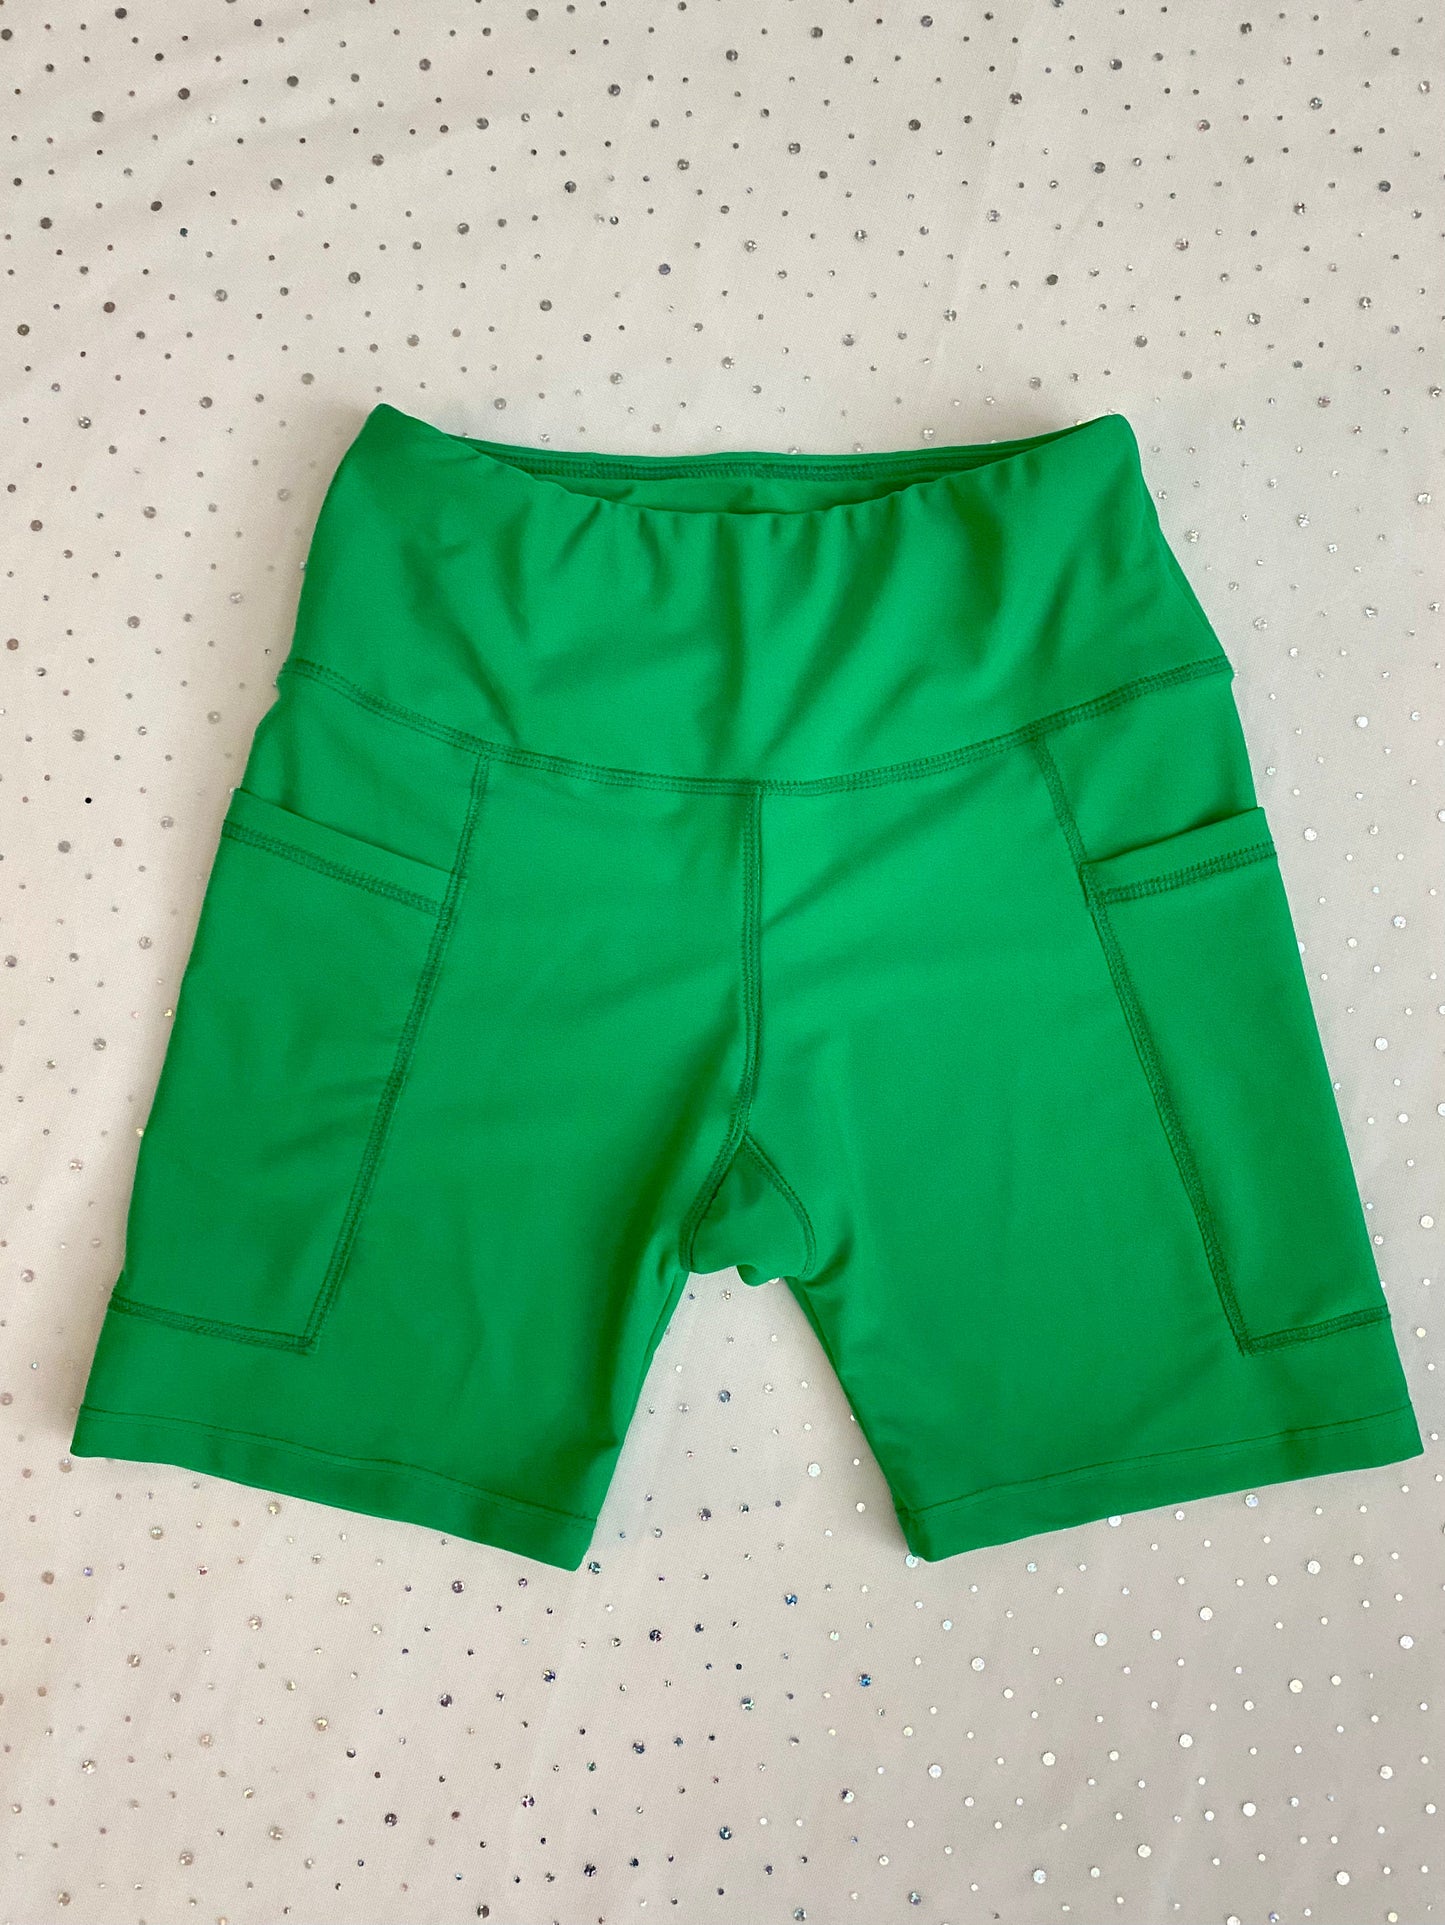 Custom shorts 7" inseam